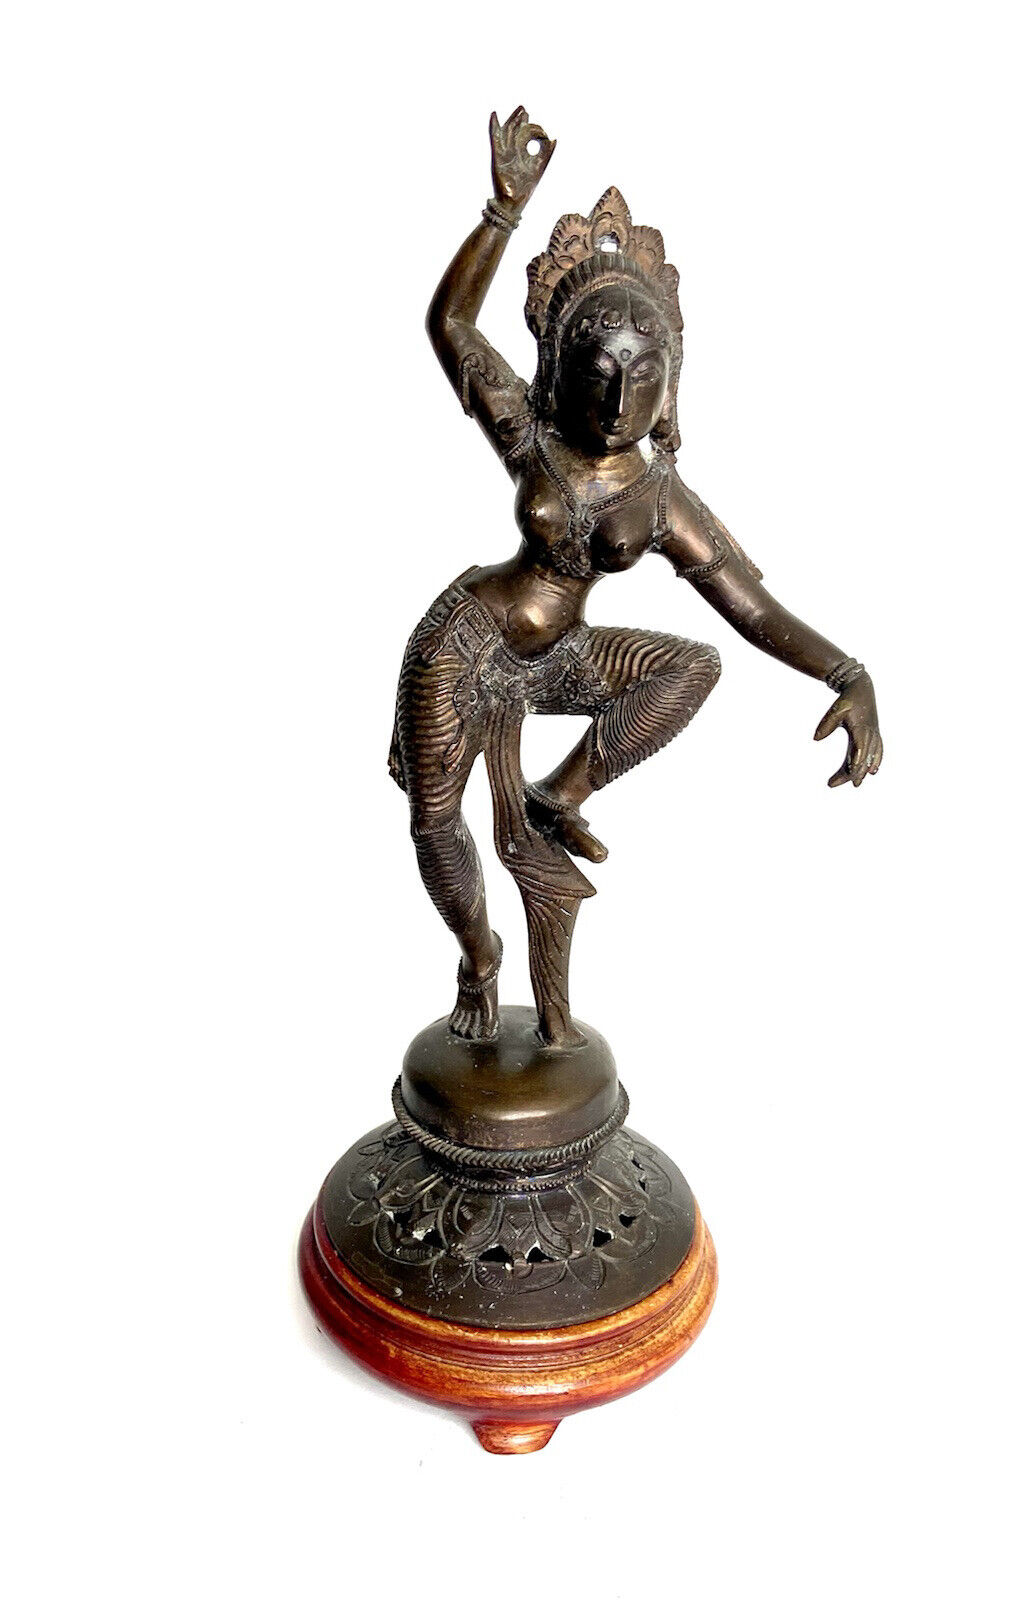 VTG Antique Solid Brass Figurine Hindu Dancing Devi Goddess Statue Sculpture 13”